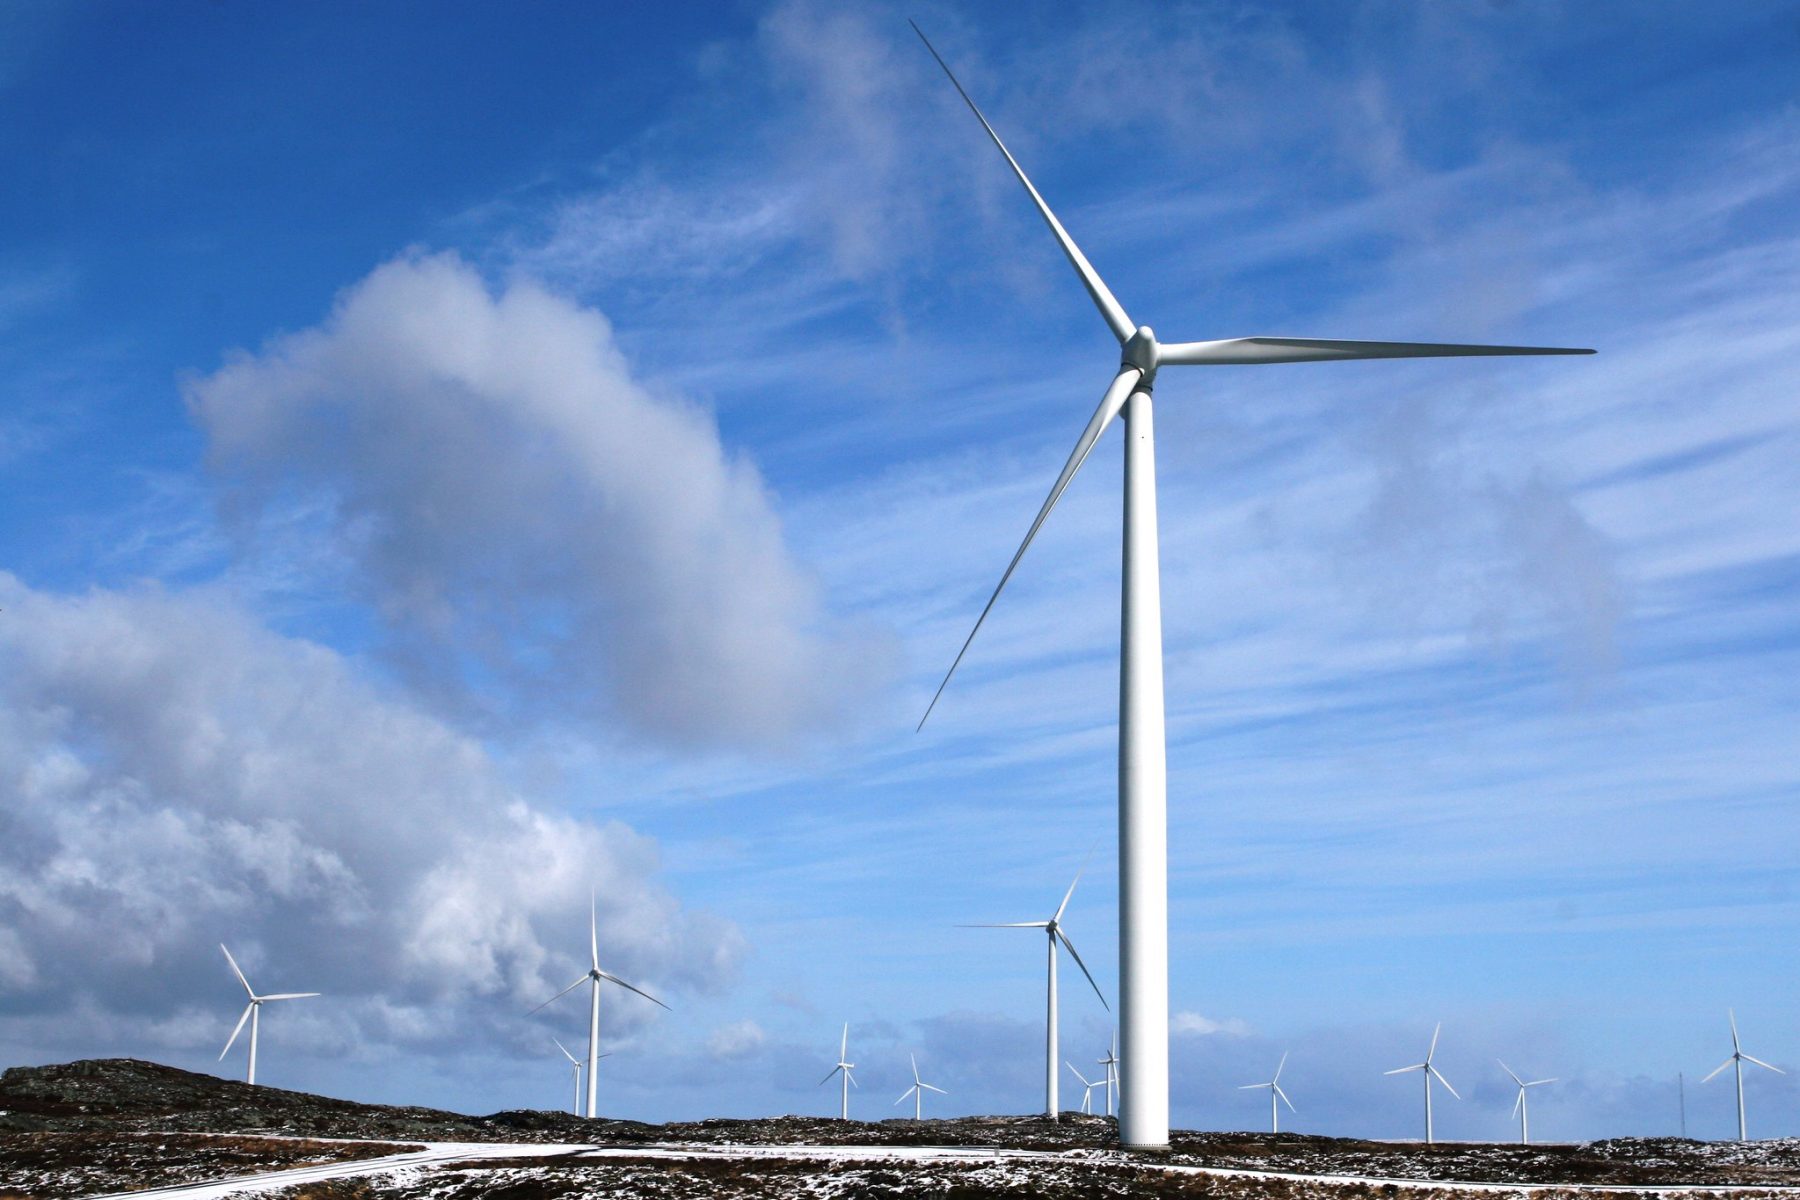 Wind farm on the island of Smøla in Norway (Photo by Statkraft/Bjørn Iuell)